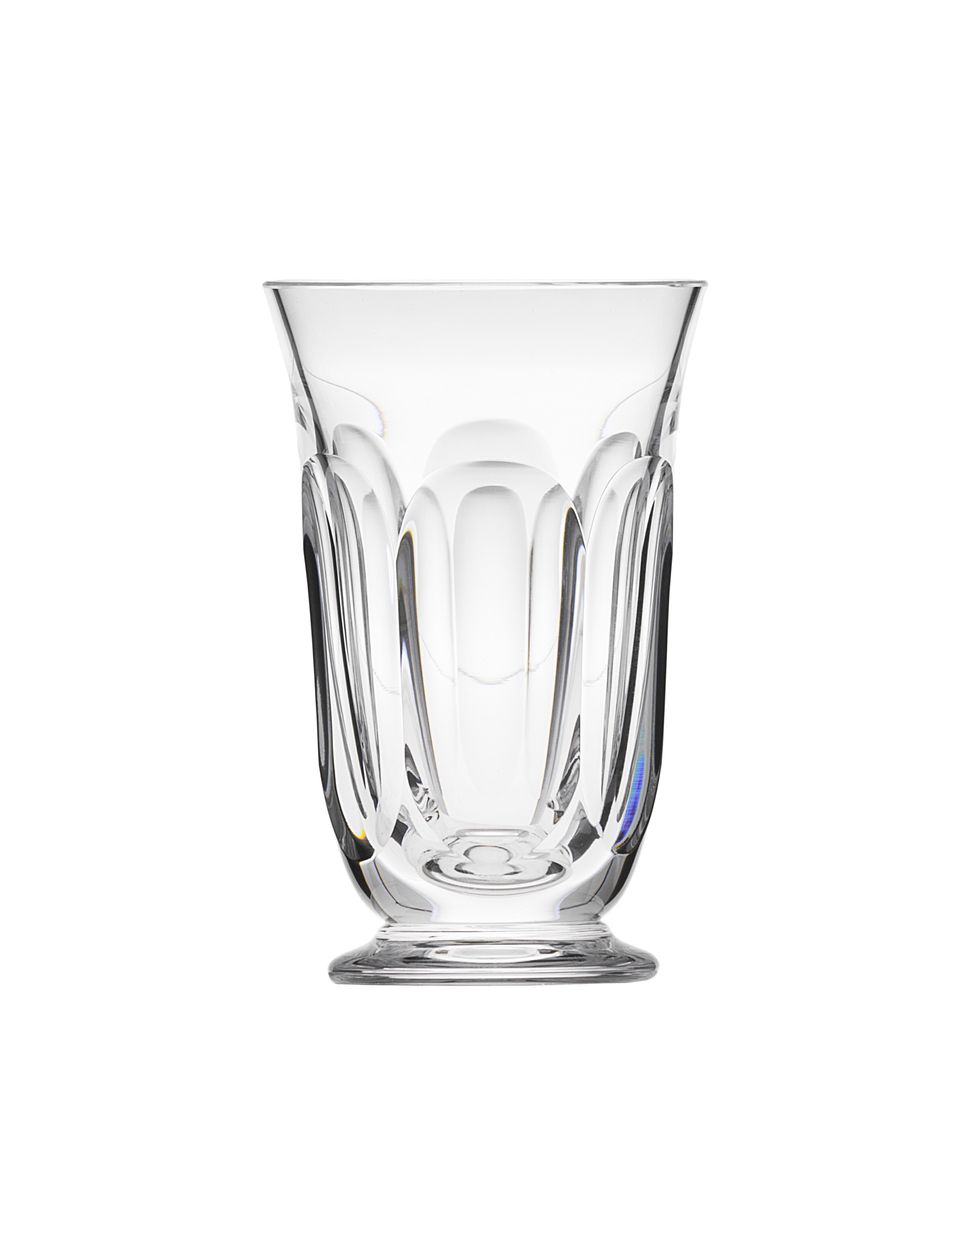 Lady Hamilton spirit glass, 45 ml